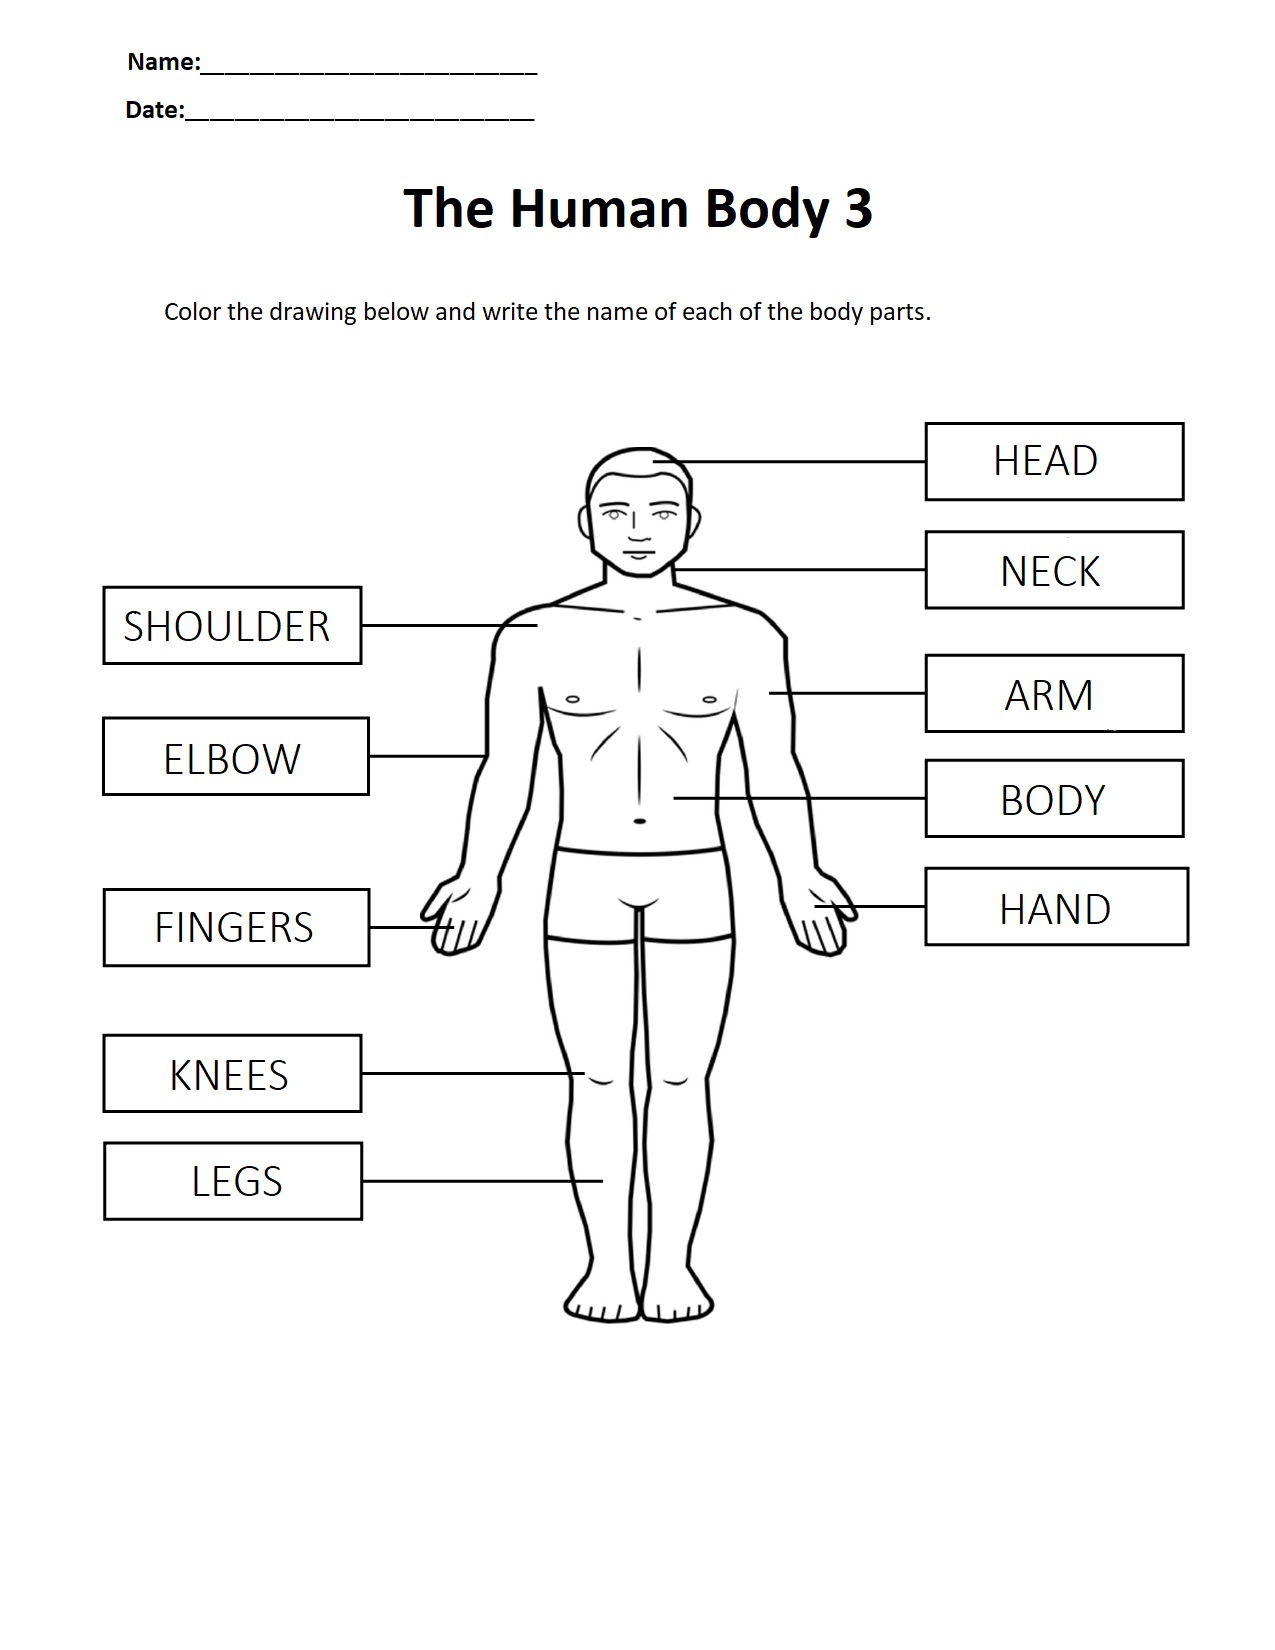 The Human Body 3.jpg